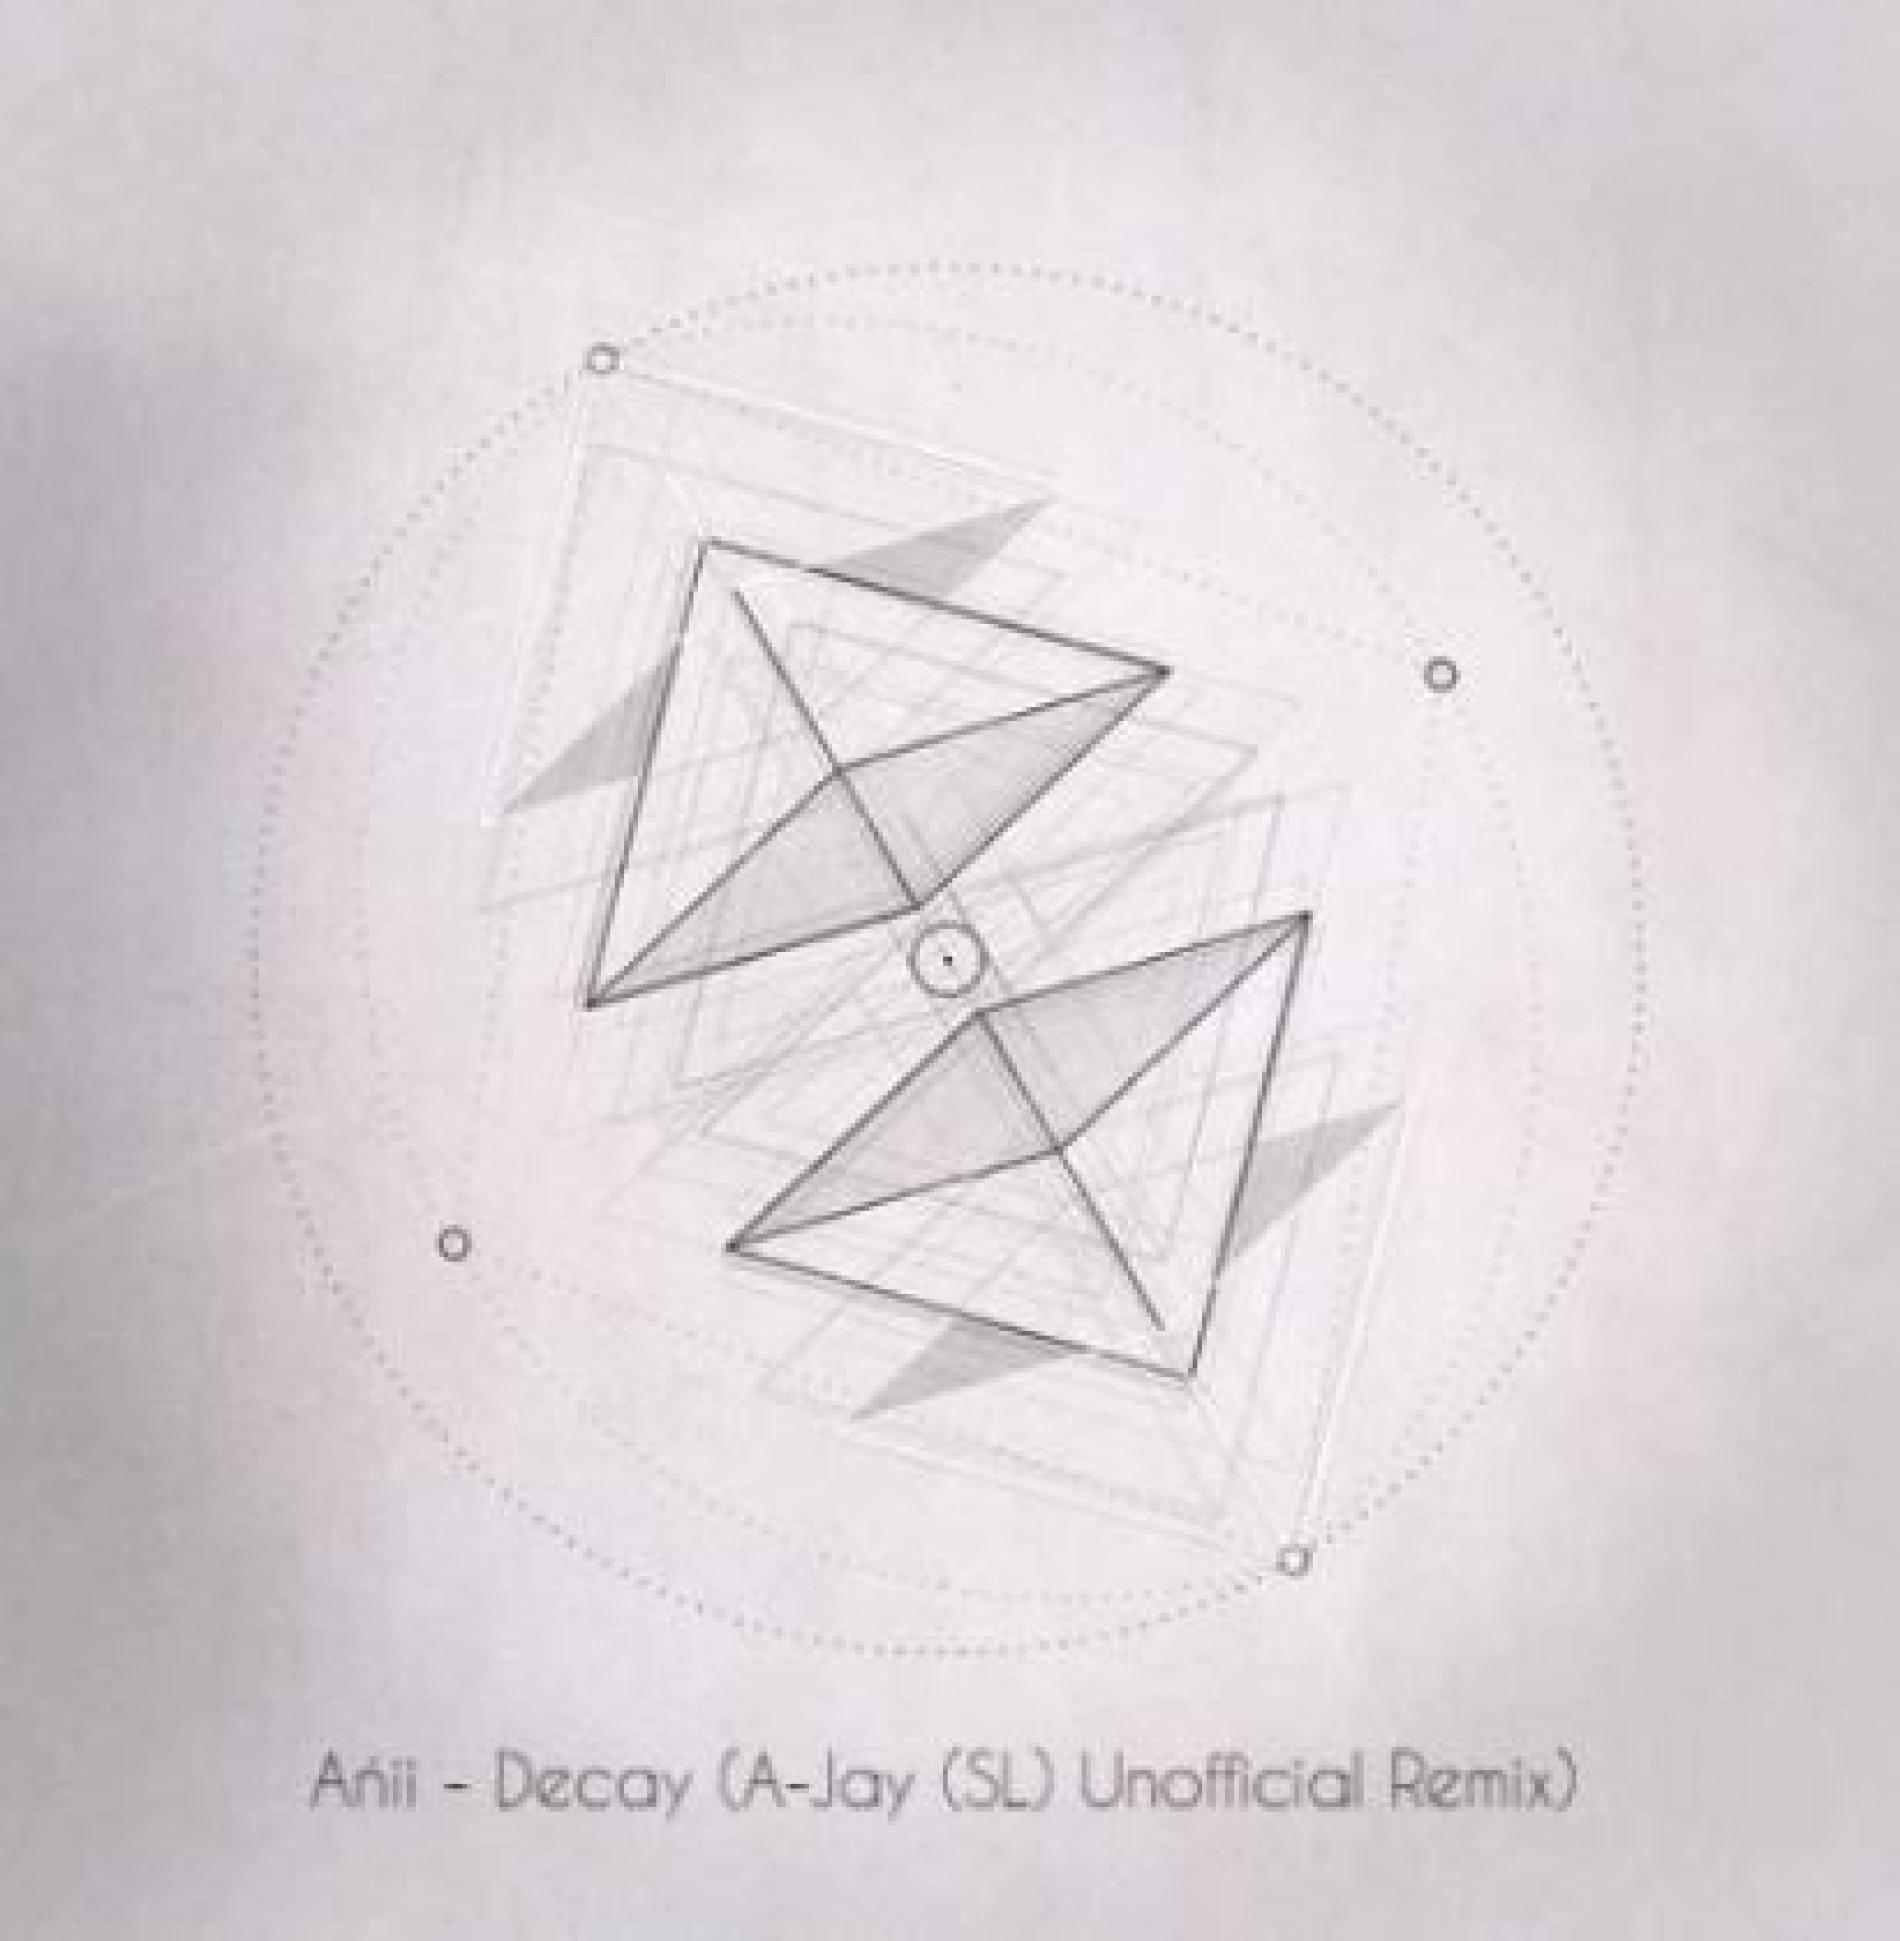 Ańii – Decay (A-Jay (SL)’s Unofficial Remix)